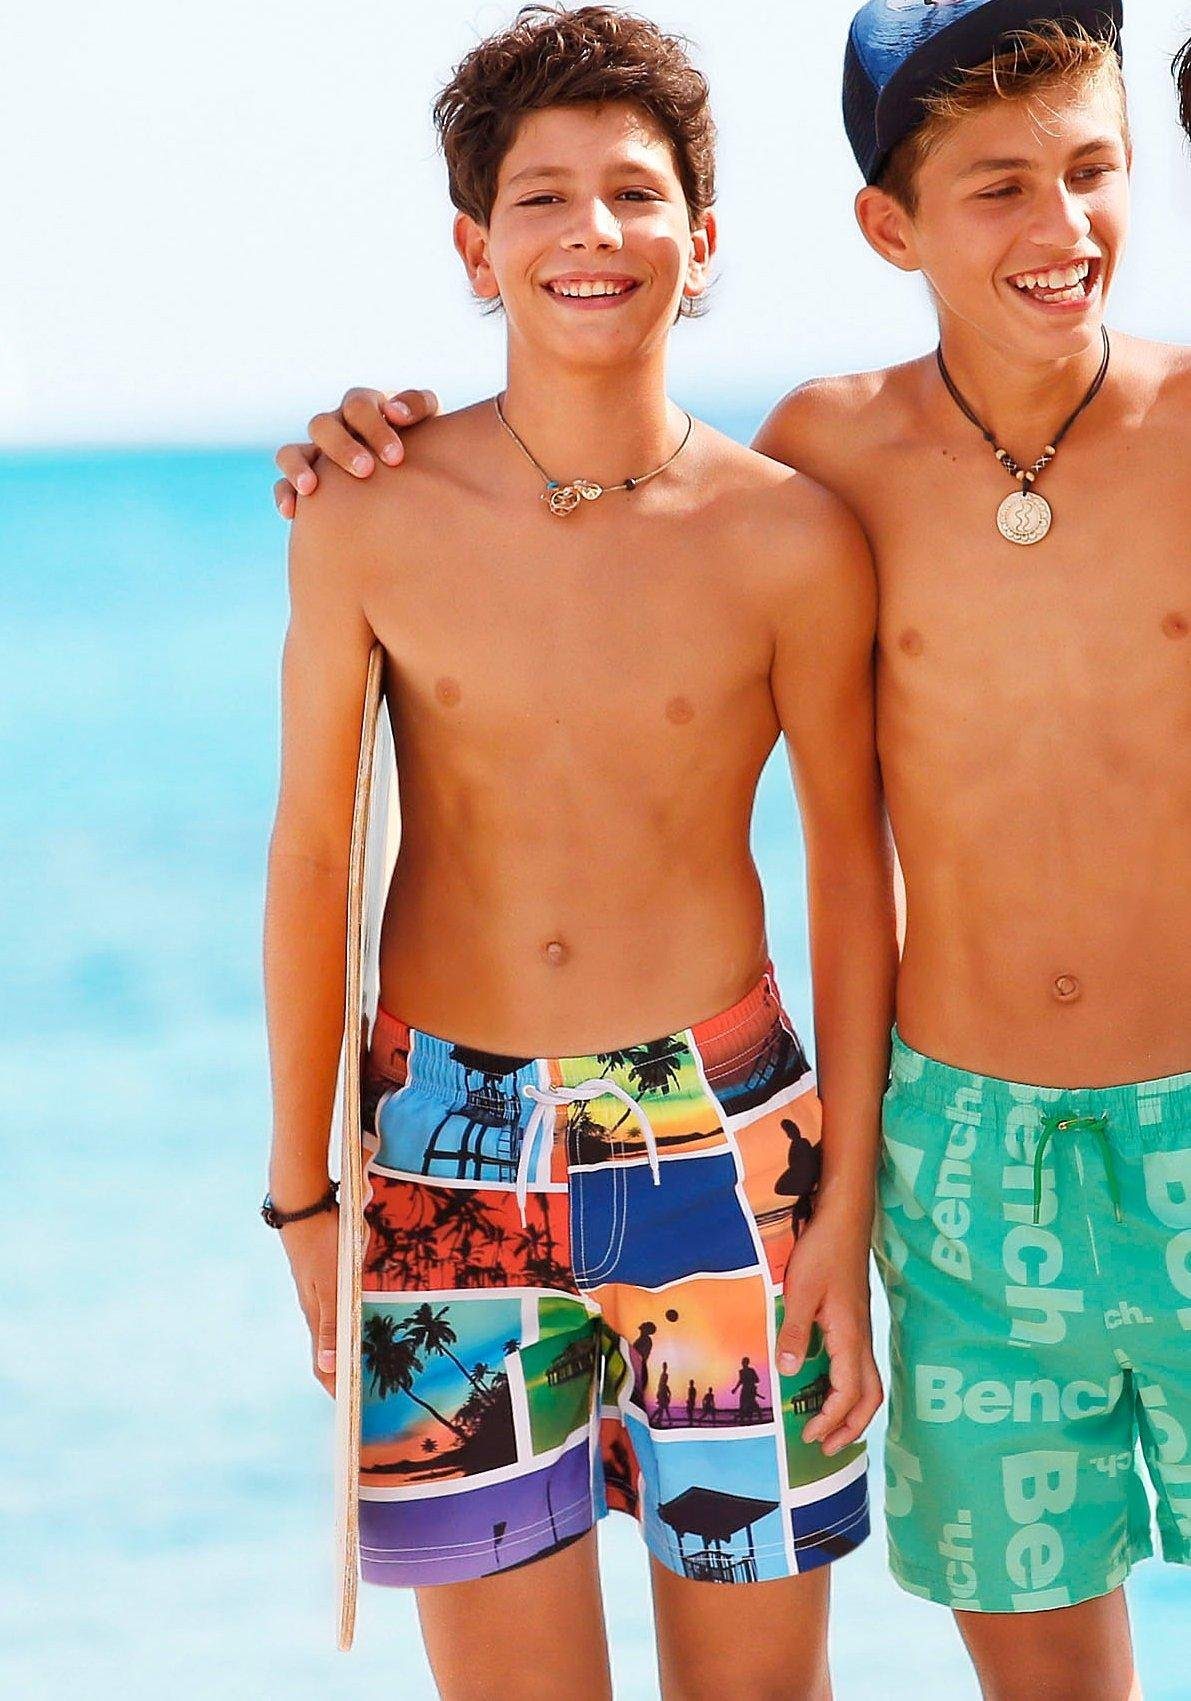 геи подростки на пляже фото (120) фото